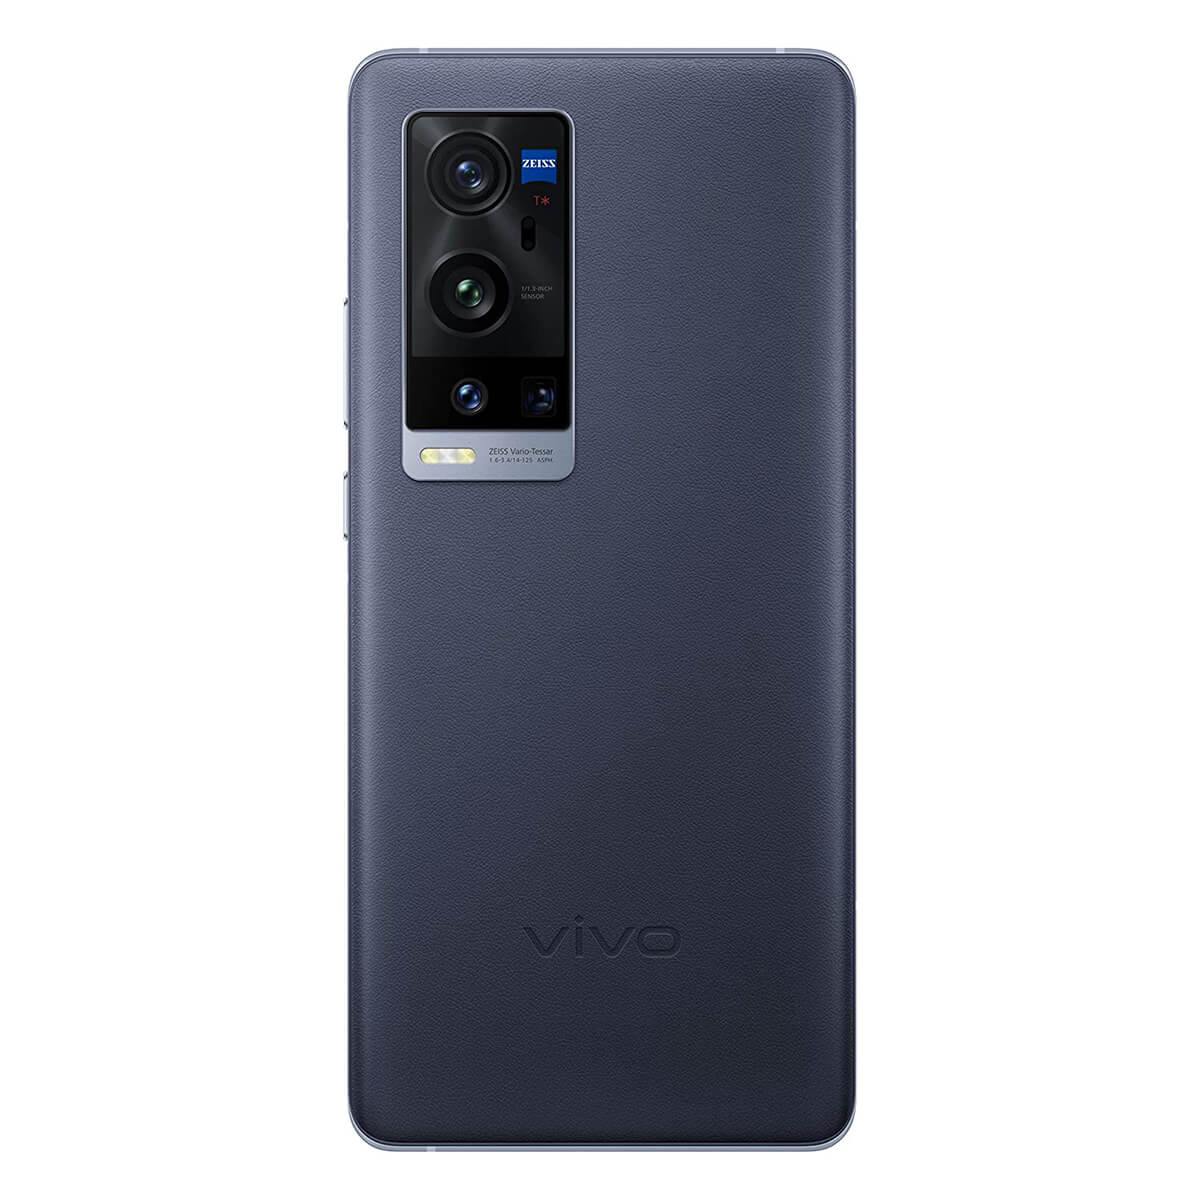 X60 PRO PLUS VIVO (12+256GB) MOBILE EMPER BLUE - bnewmobile